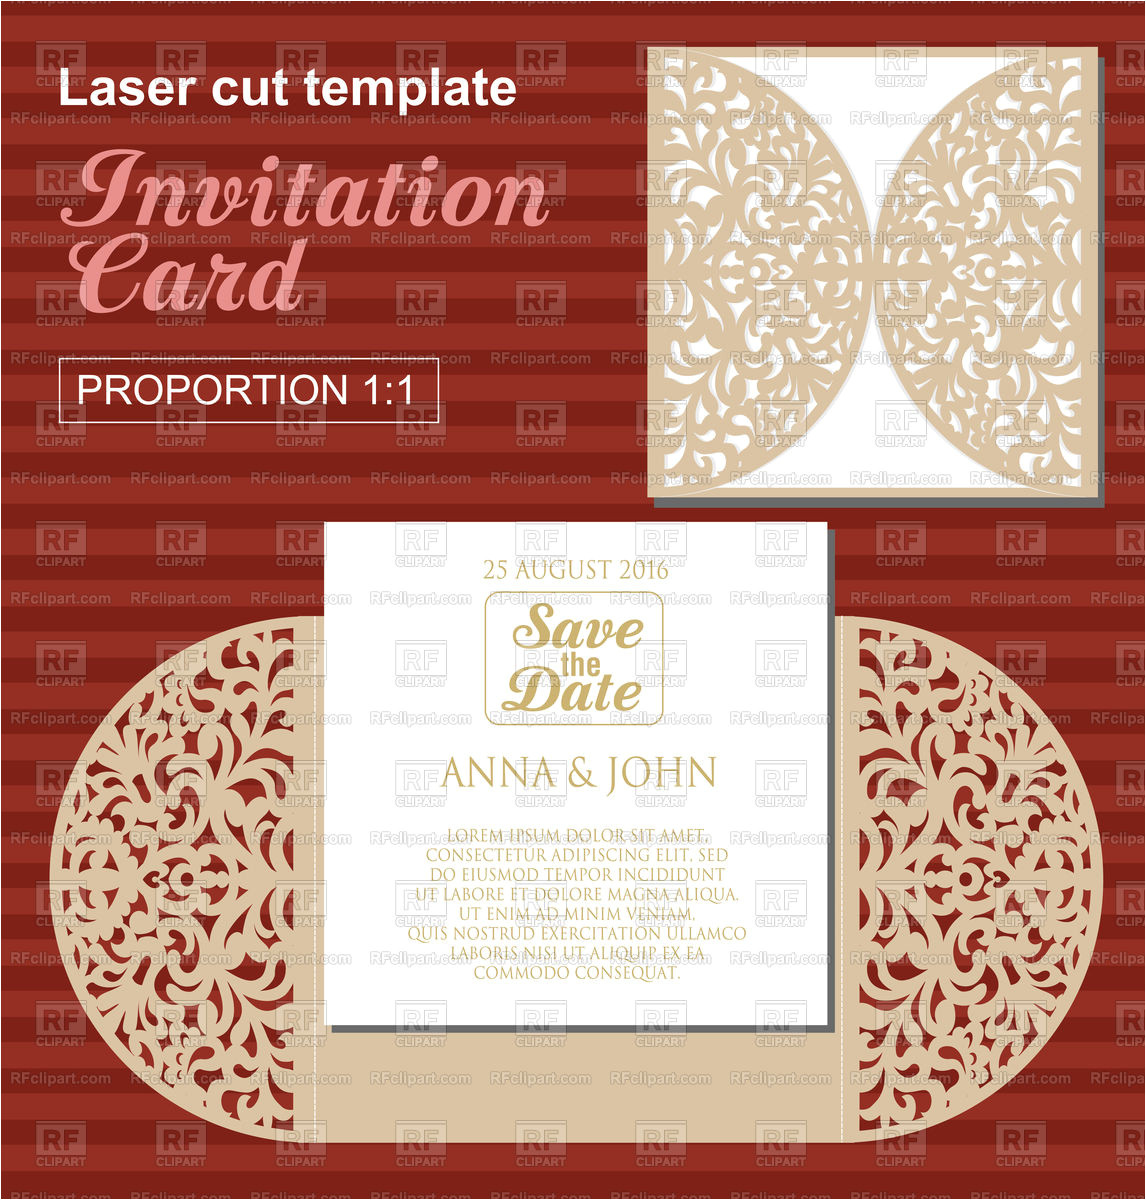 die laser cut wedding card template wedding invitation card mock up 111612 vector clipart